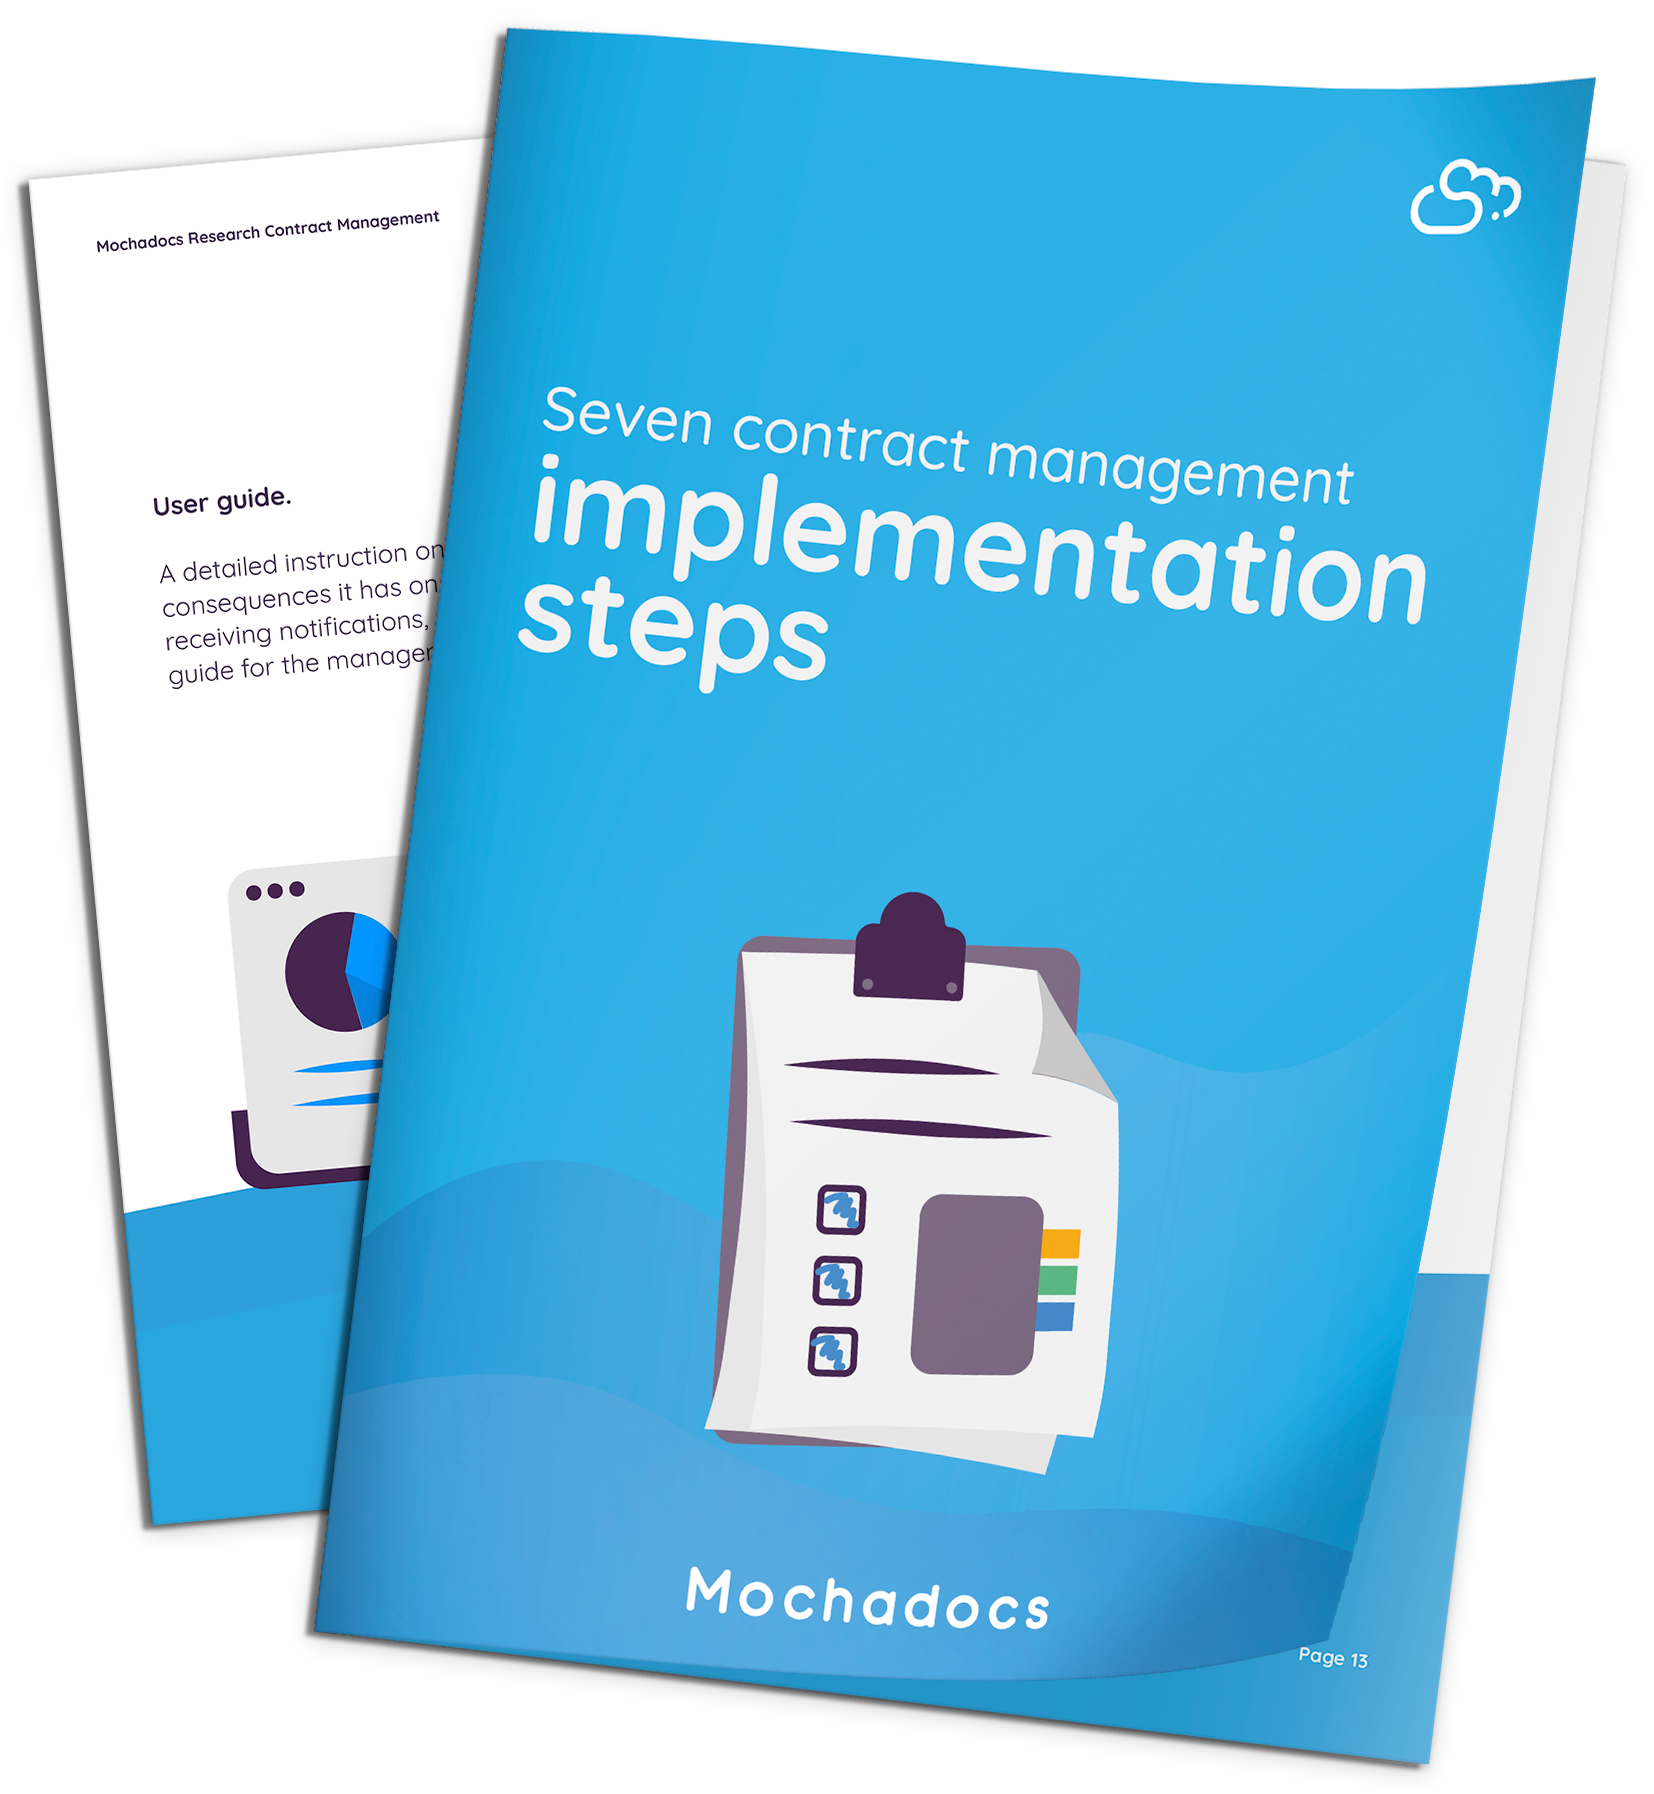 Mochadocs - Contract Management - eBook - Seven Contract Implementation Steps